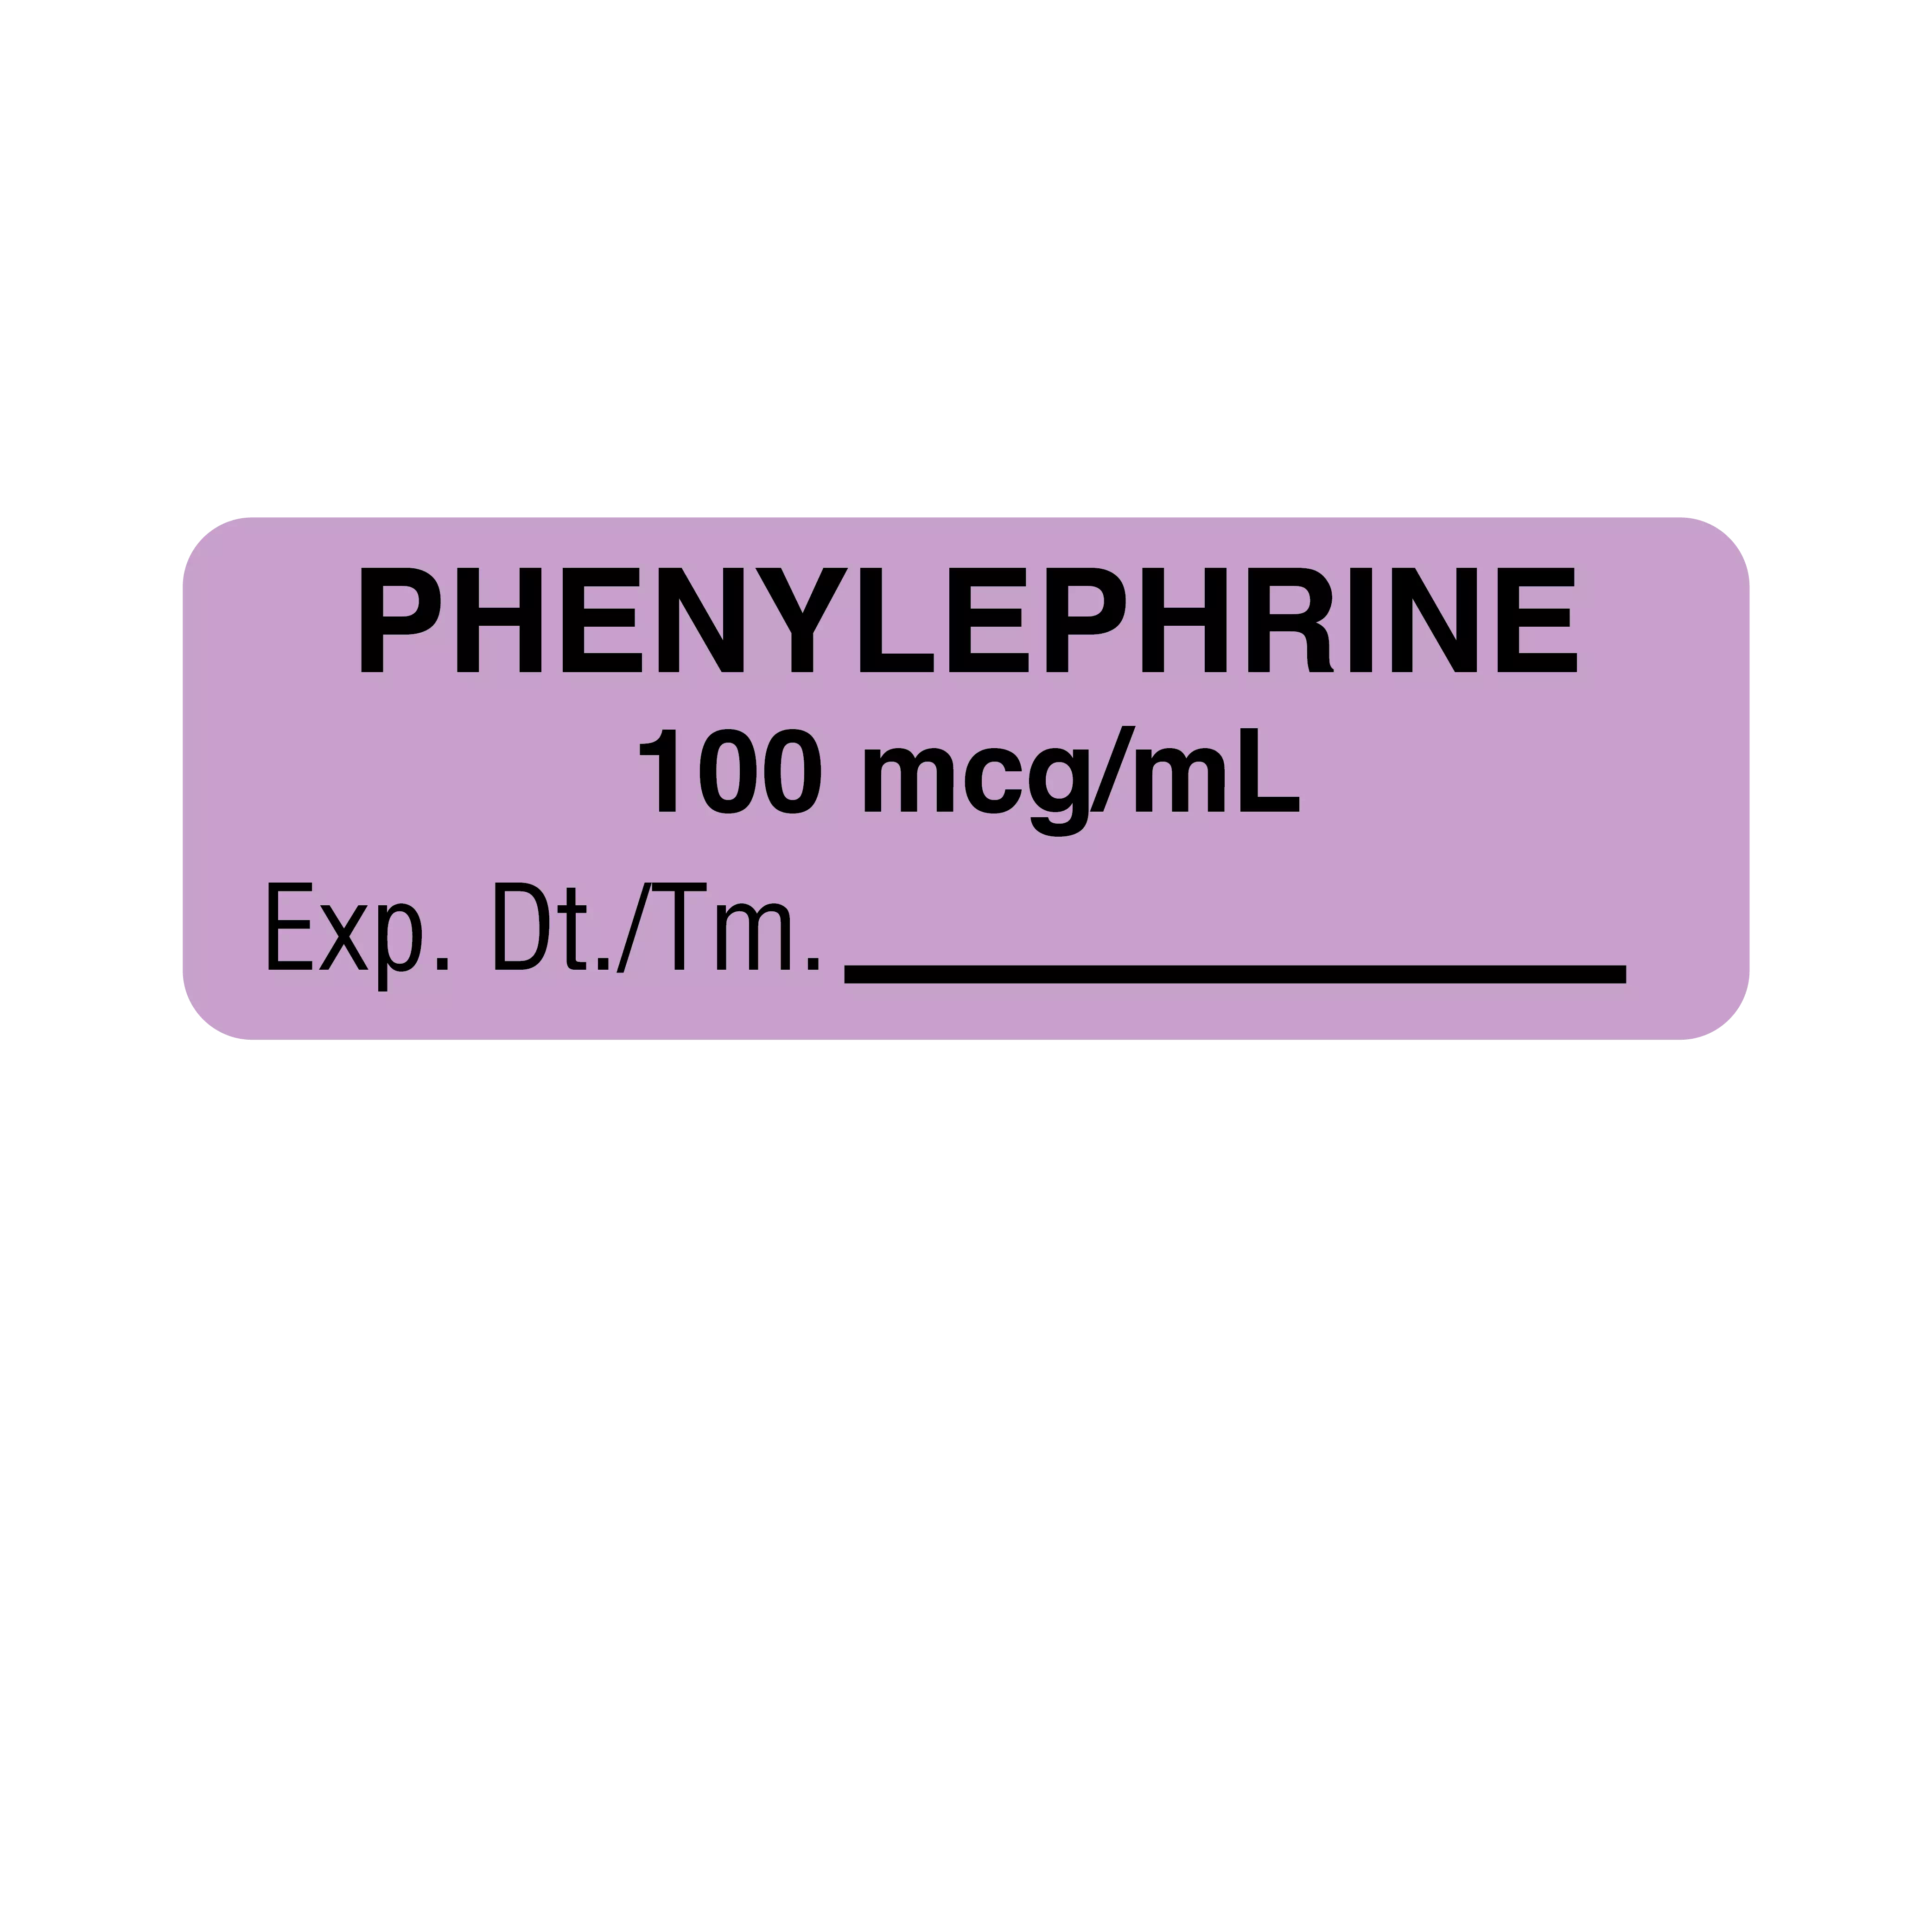 Phenylephrine 100 mcg/mL